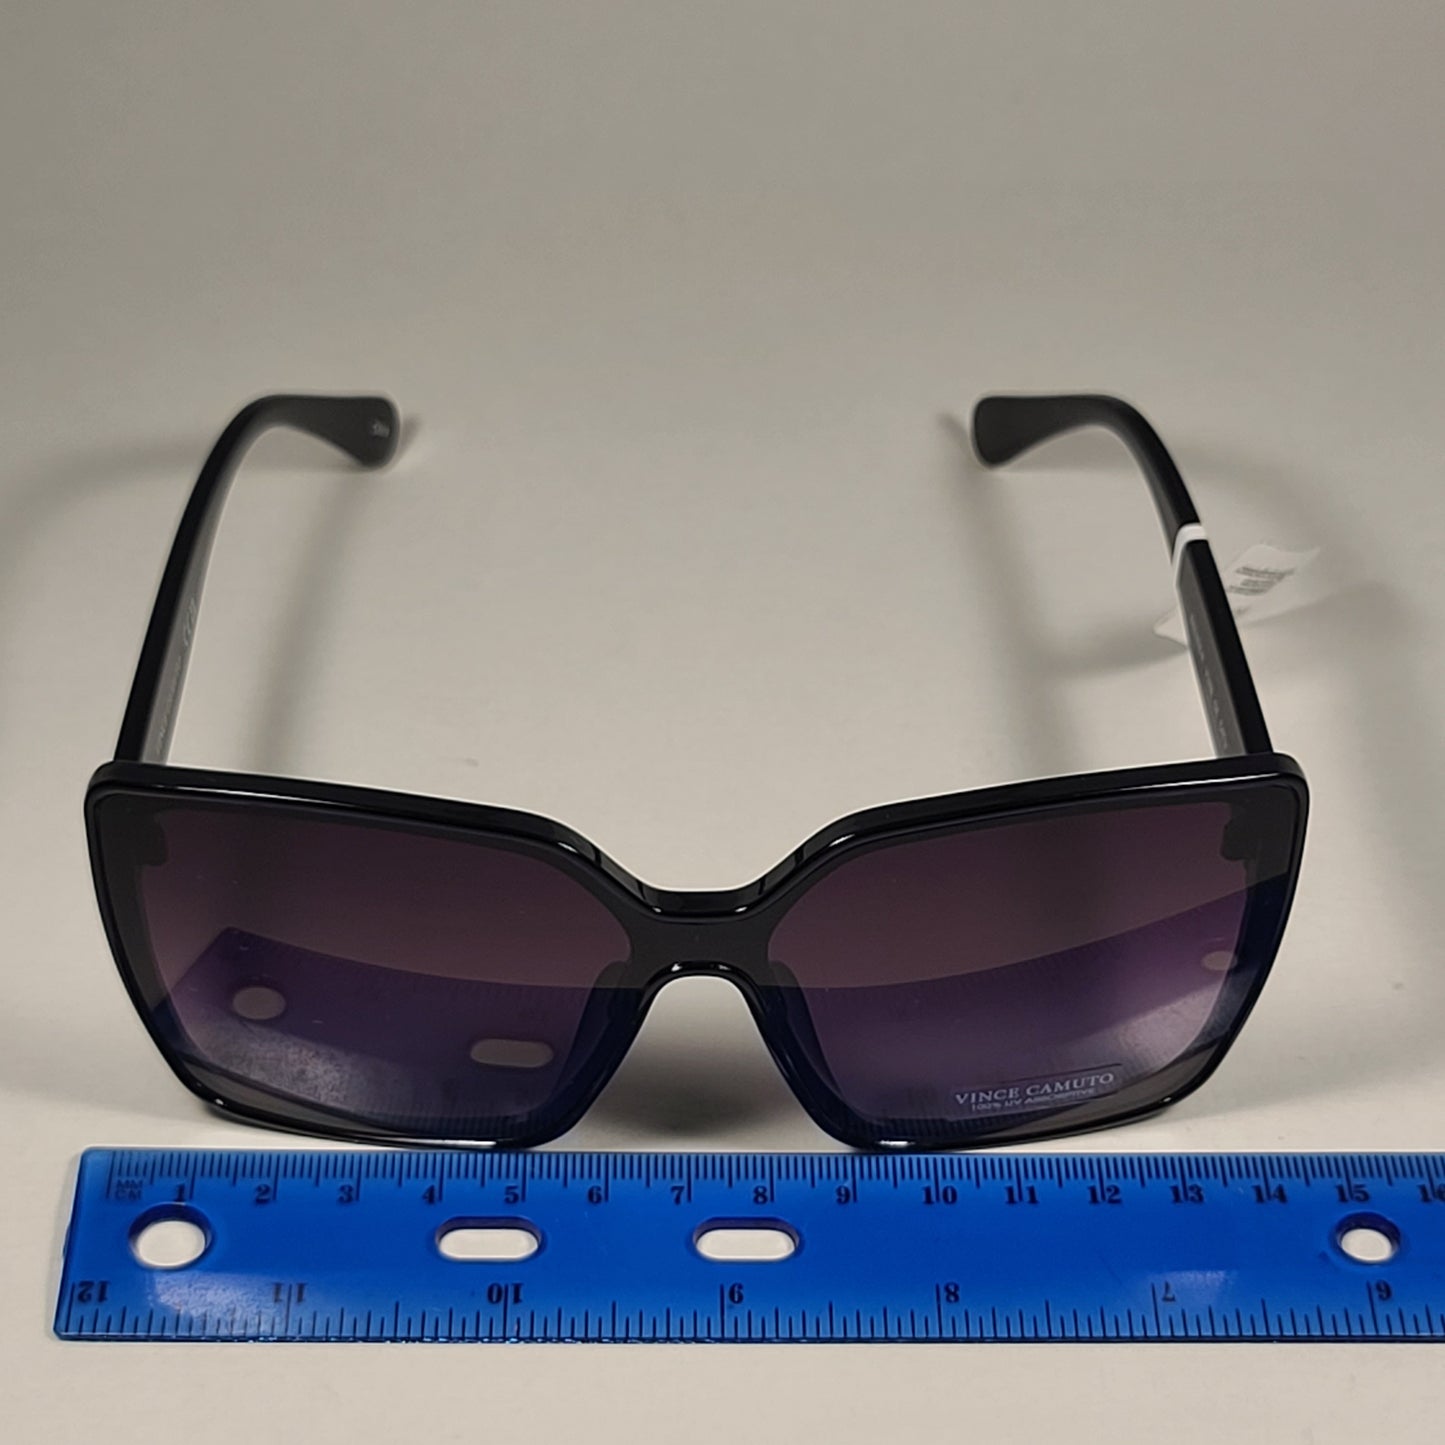 Vince Camuto VC999 OX Butterfly Shield Sunglasses Black Frame Smoke Gradient Lens - Sunglasses